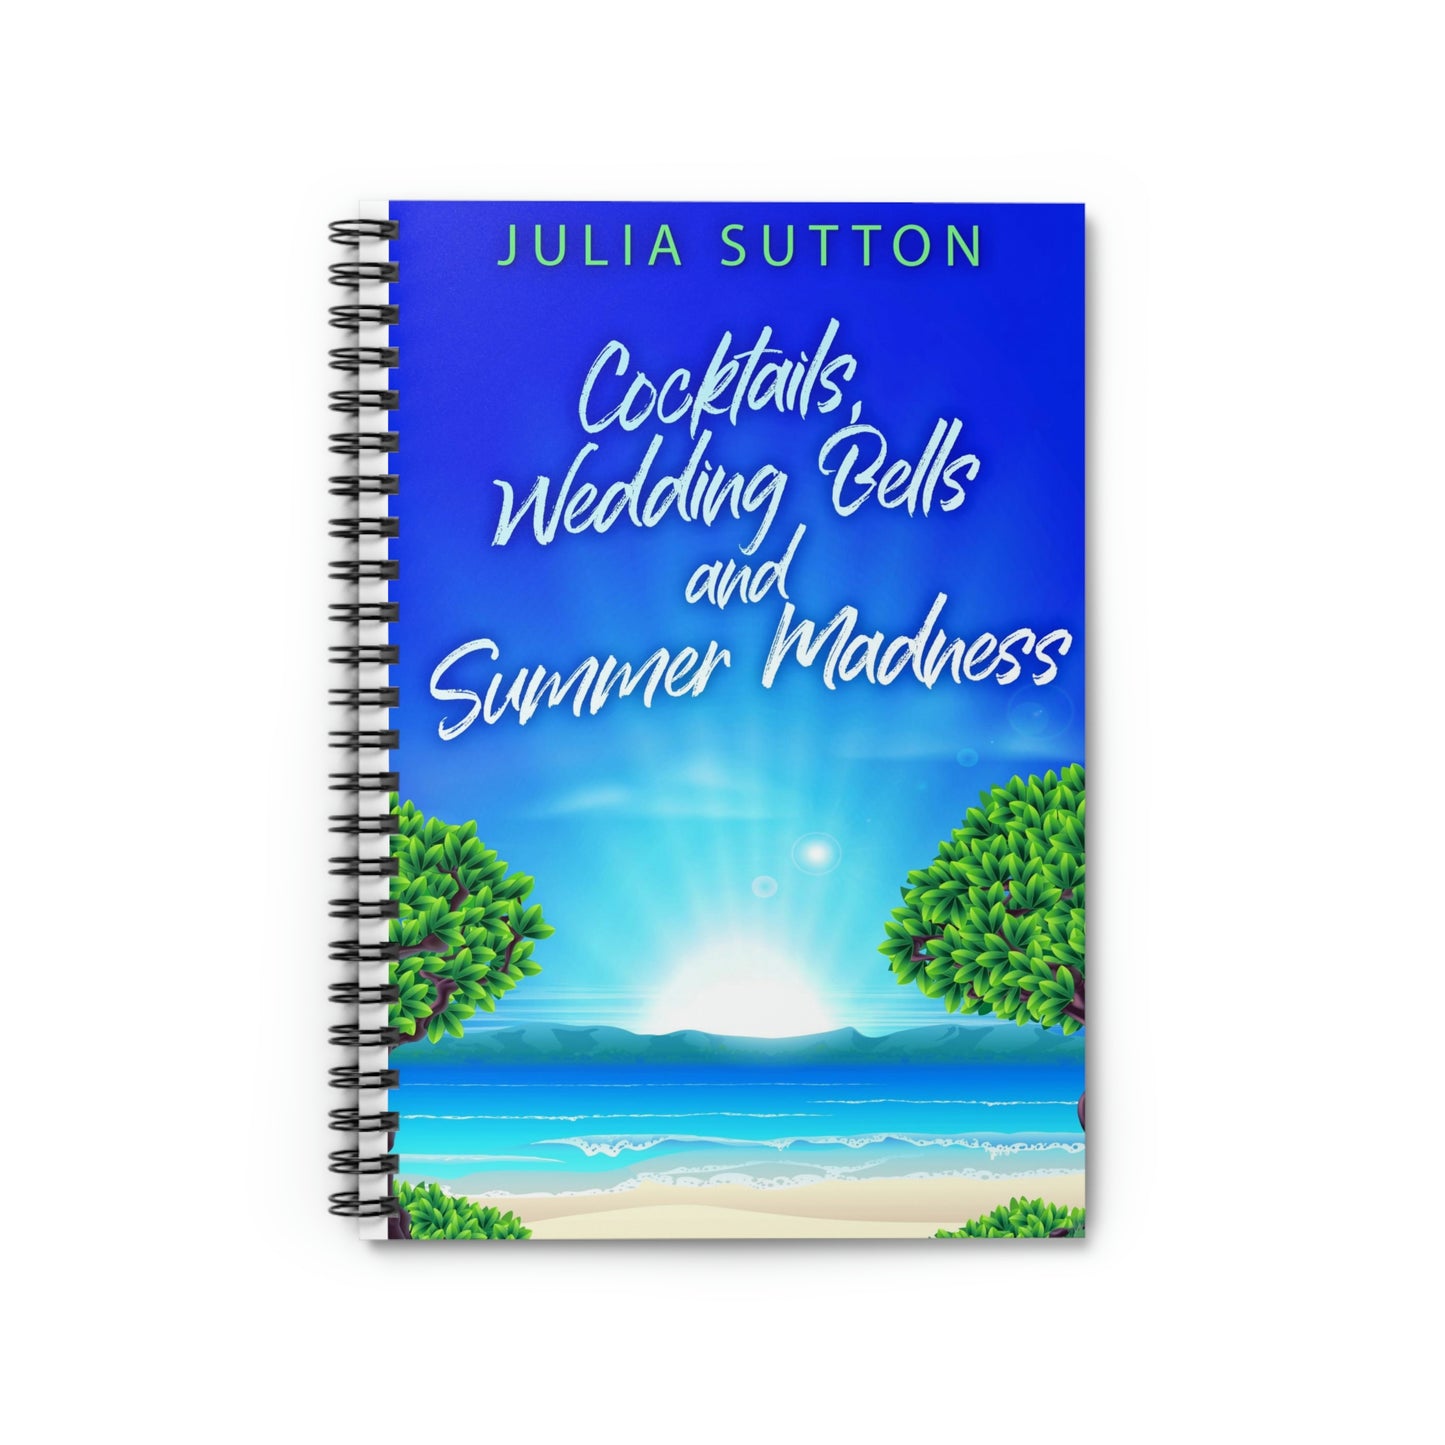 Cocktails, Wedding Bells and Summer Madness - Spiral Notebook